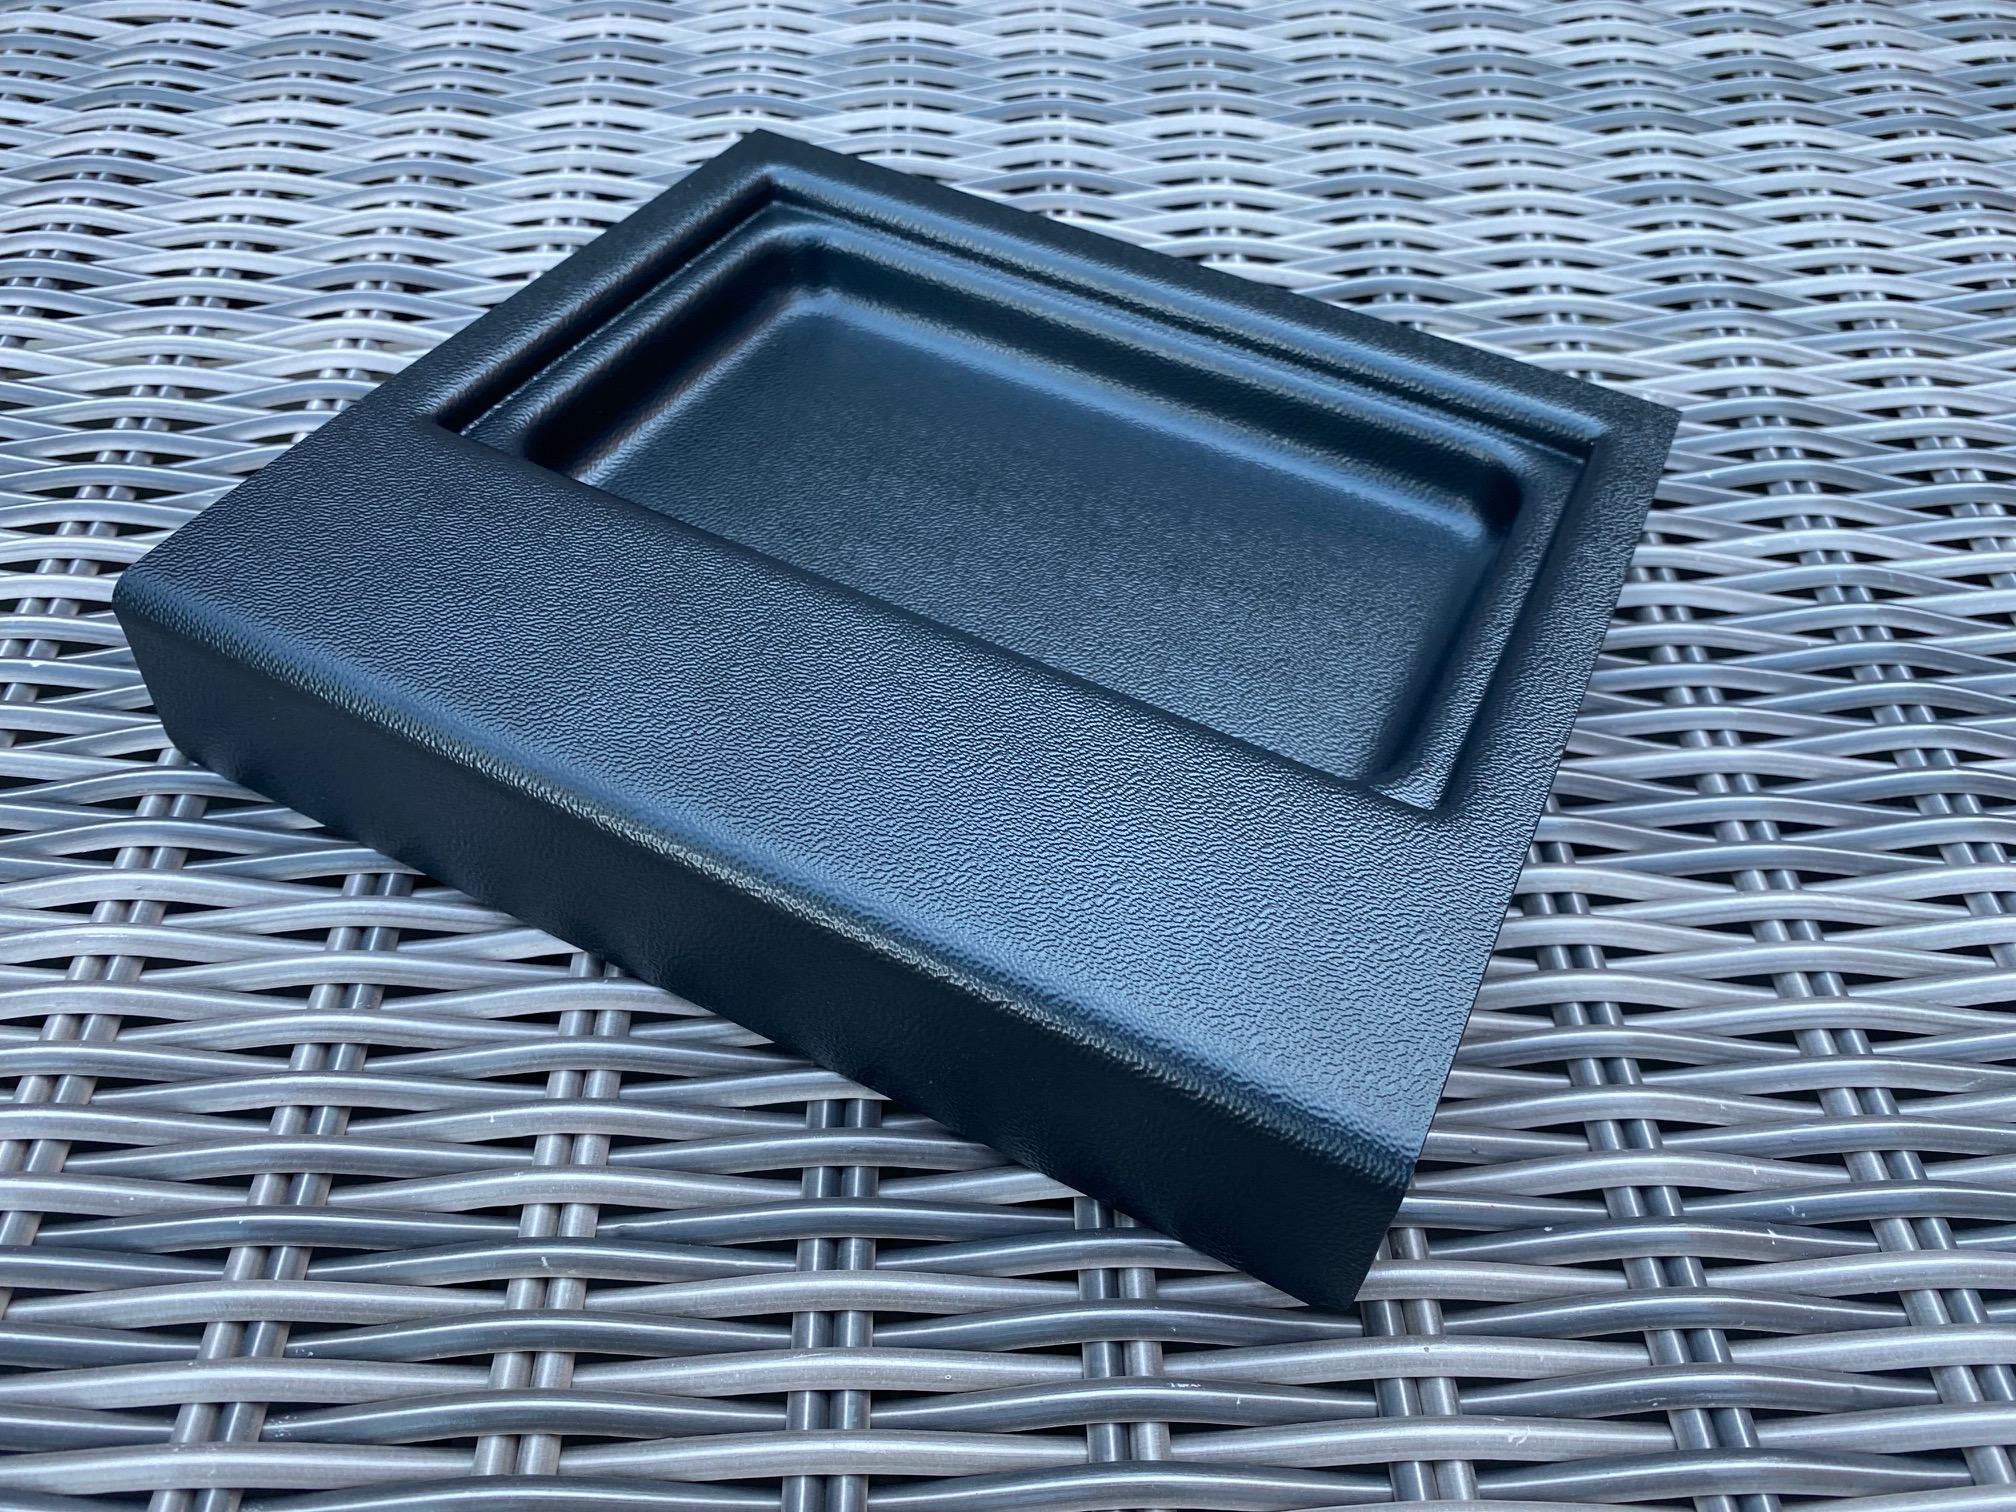 Deep slim drip tray front top